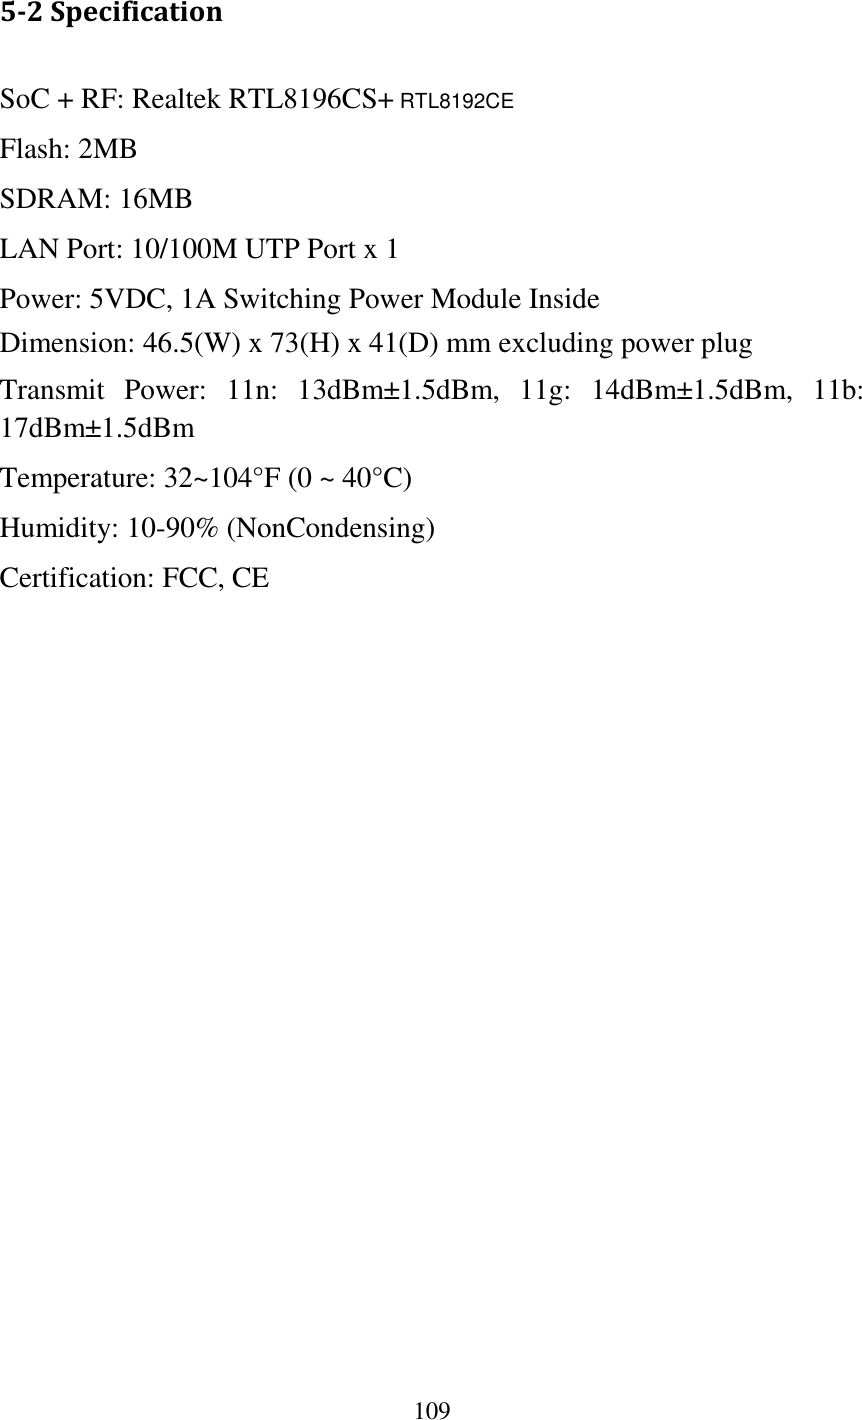 109  5-2 Specification SoC + RF: Realtek RTL8196CS+ RTL8192CE Flash: 2MB   SDRAM: 16MB   LAN Port: 10/100M UTP Port x 1 Power: 5VDC, 1A Switching Power Module Inside Dimension: 46.5(W) x 73(H) x 41(D) mm excluding power plug Transmit  Power:  11n:  13dBm±1.5dBm,  11g:  14dBm±1.5dBm,  11b: 17dBm±1.5dBm   Temperature: 32~104°F (0 ~ 40°C) Humidity: 10-90% (NonCondensing) Certification: FCC, CE   